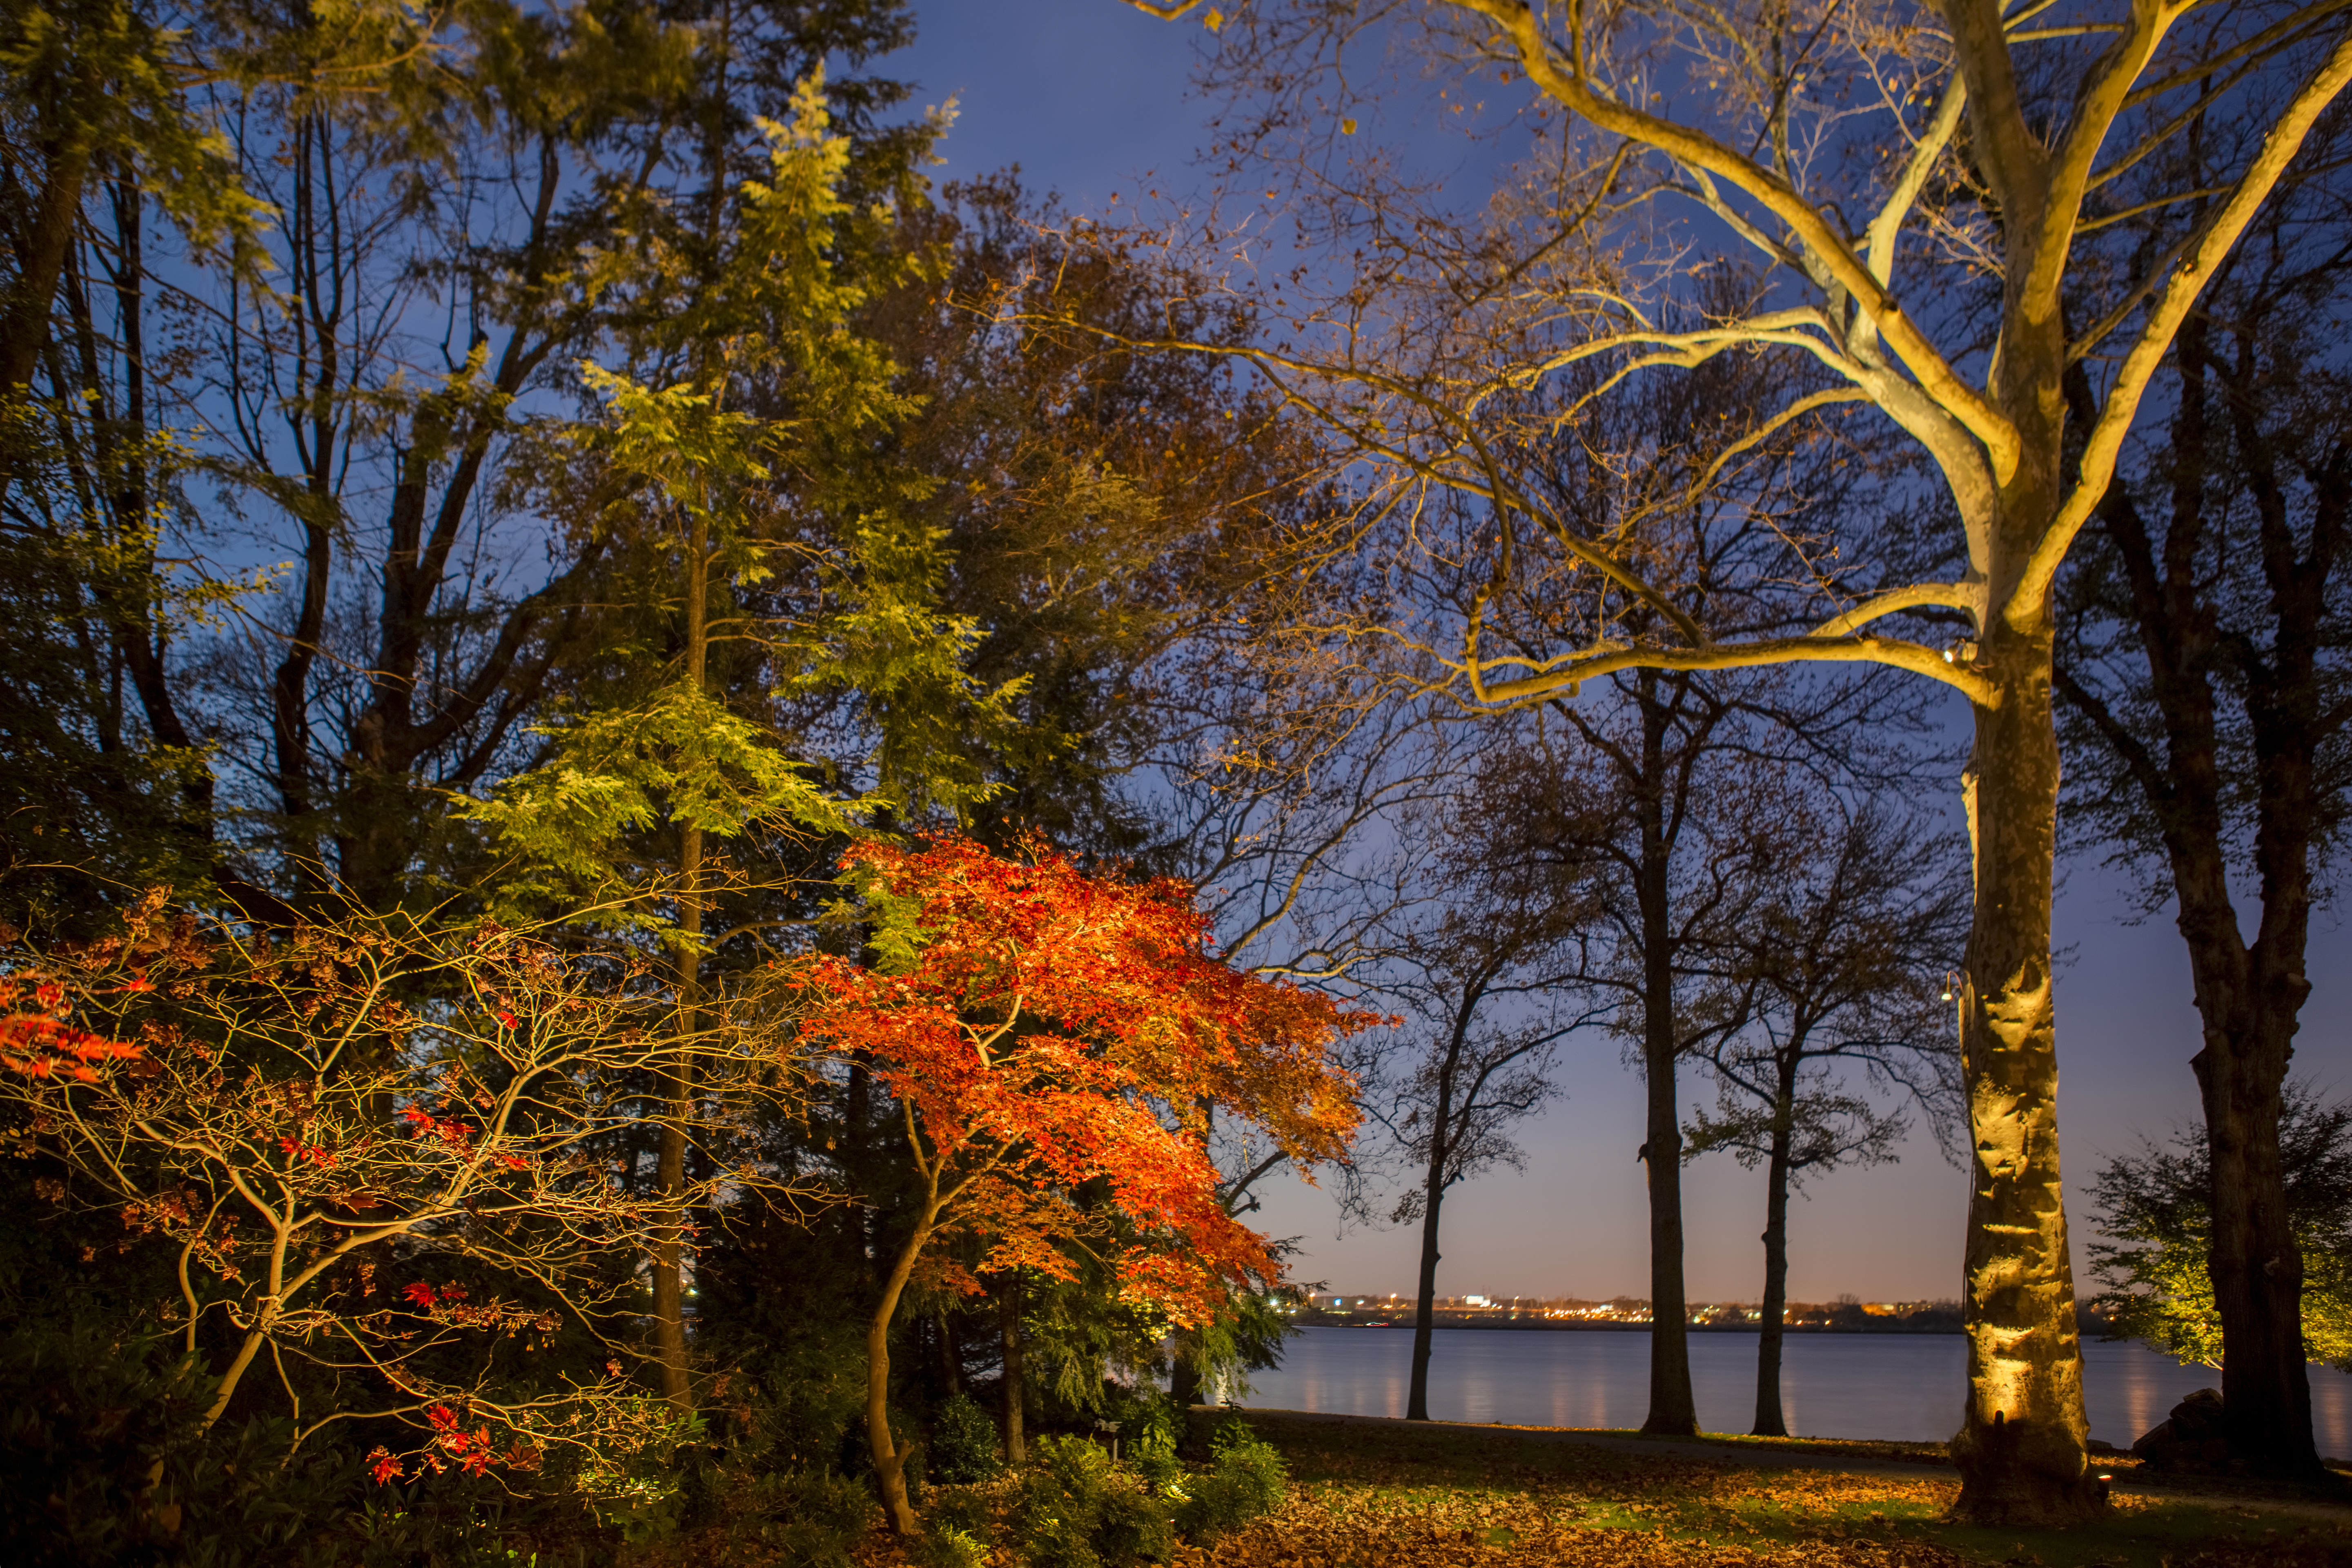 Landscape lighting on trees at dusk